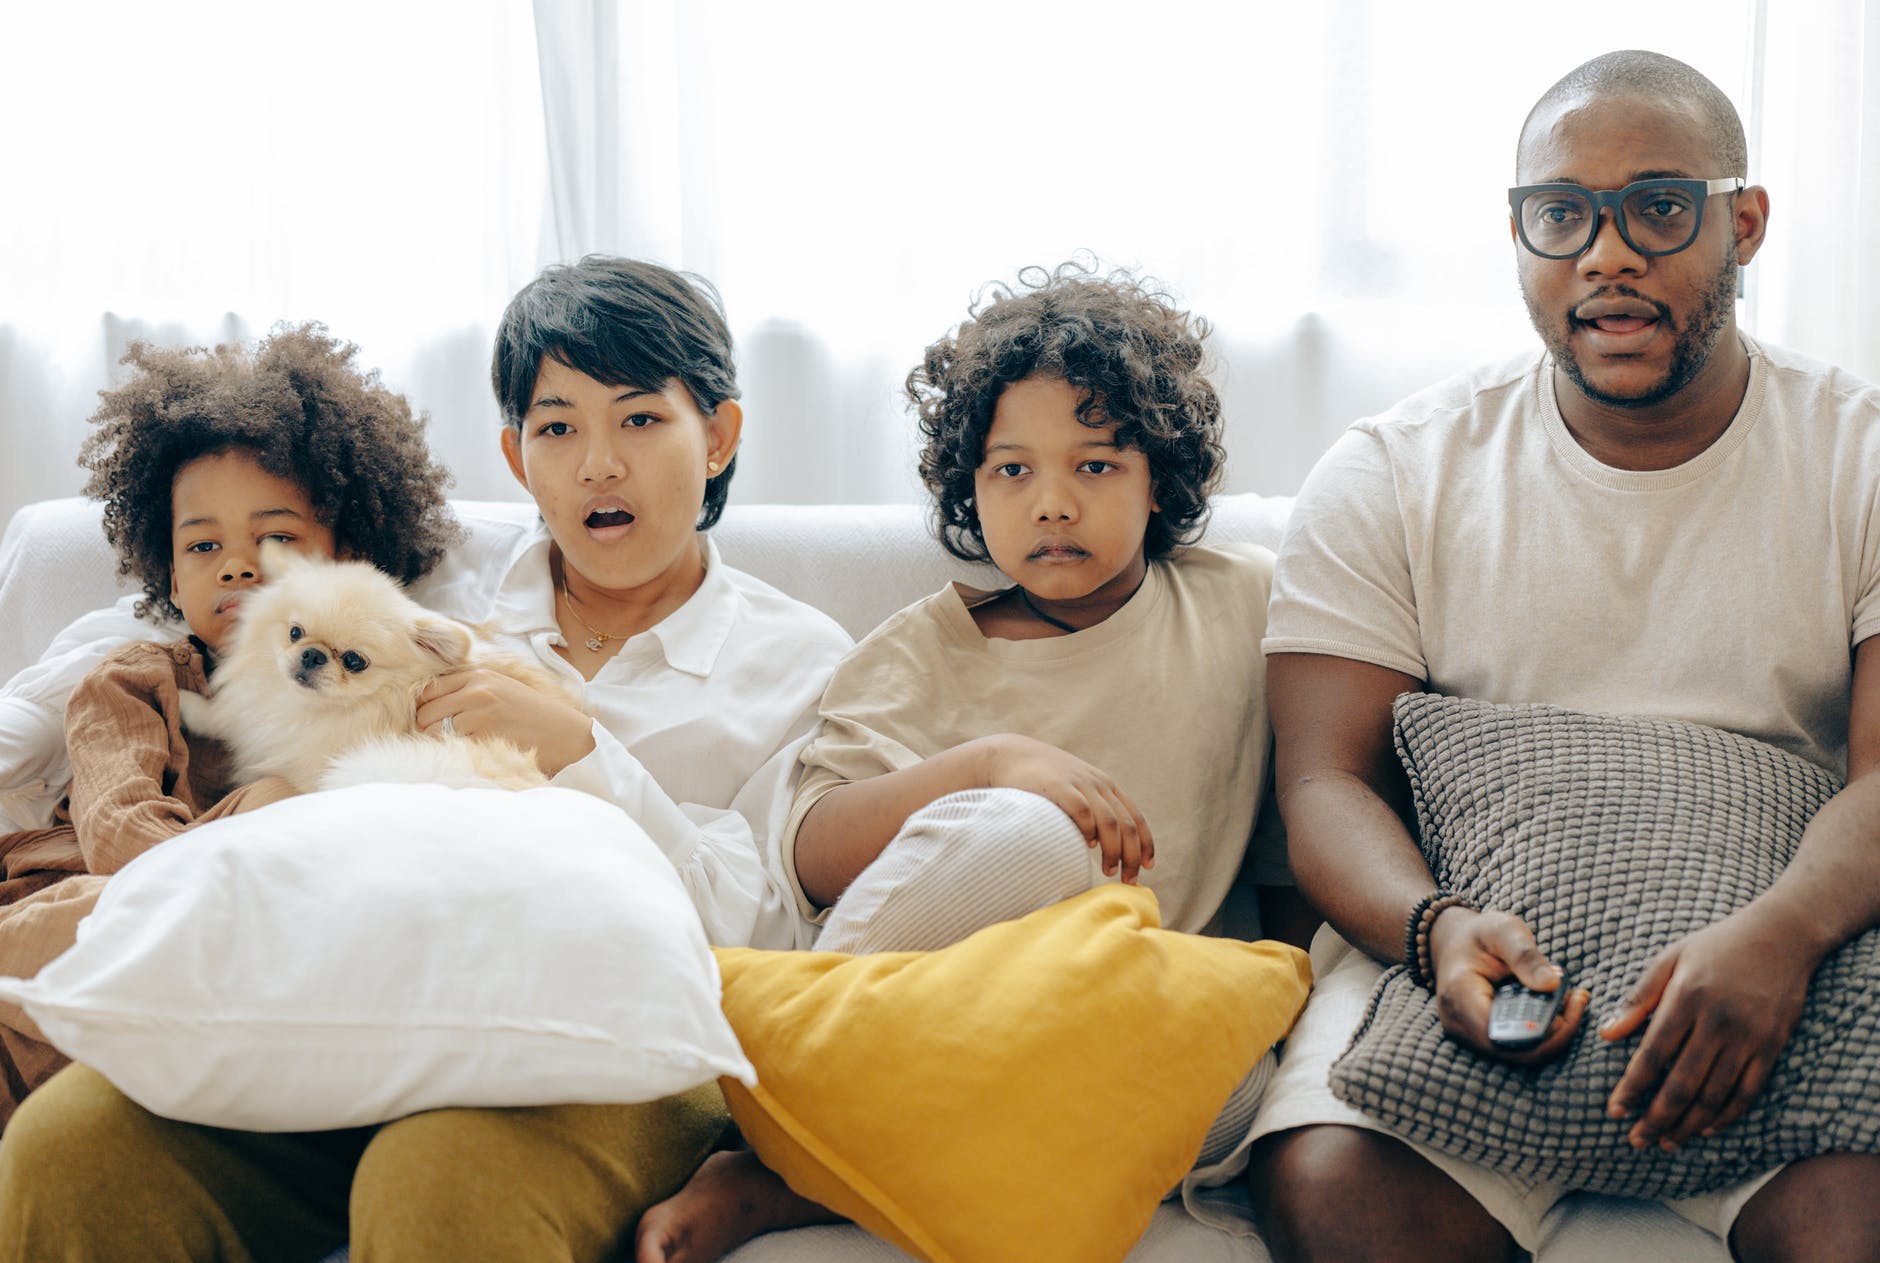 Family Watching Movie by Ketut Subiyanto on Pexels